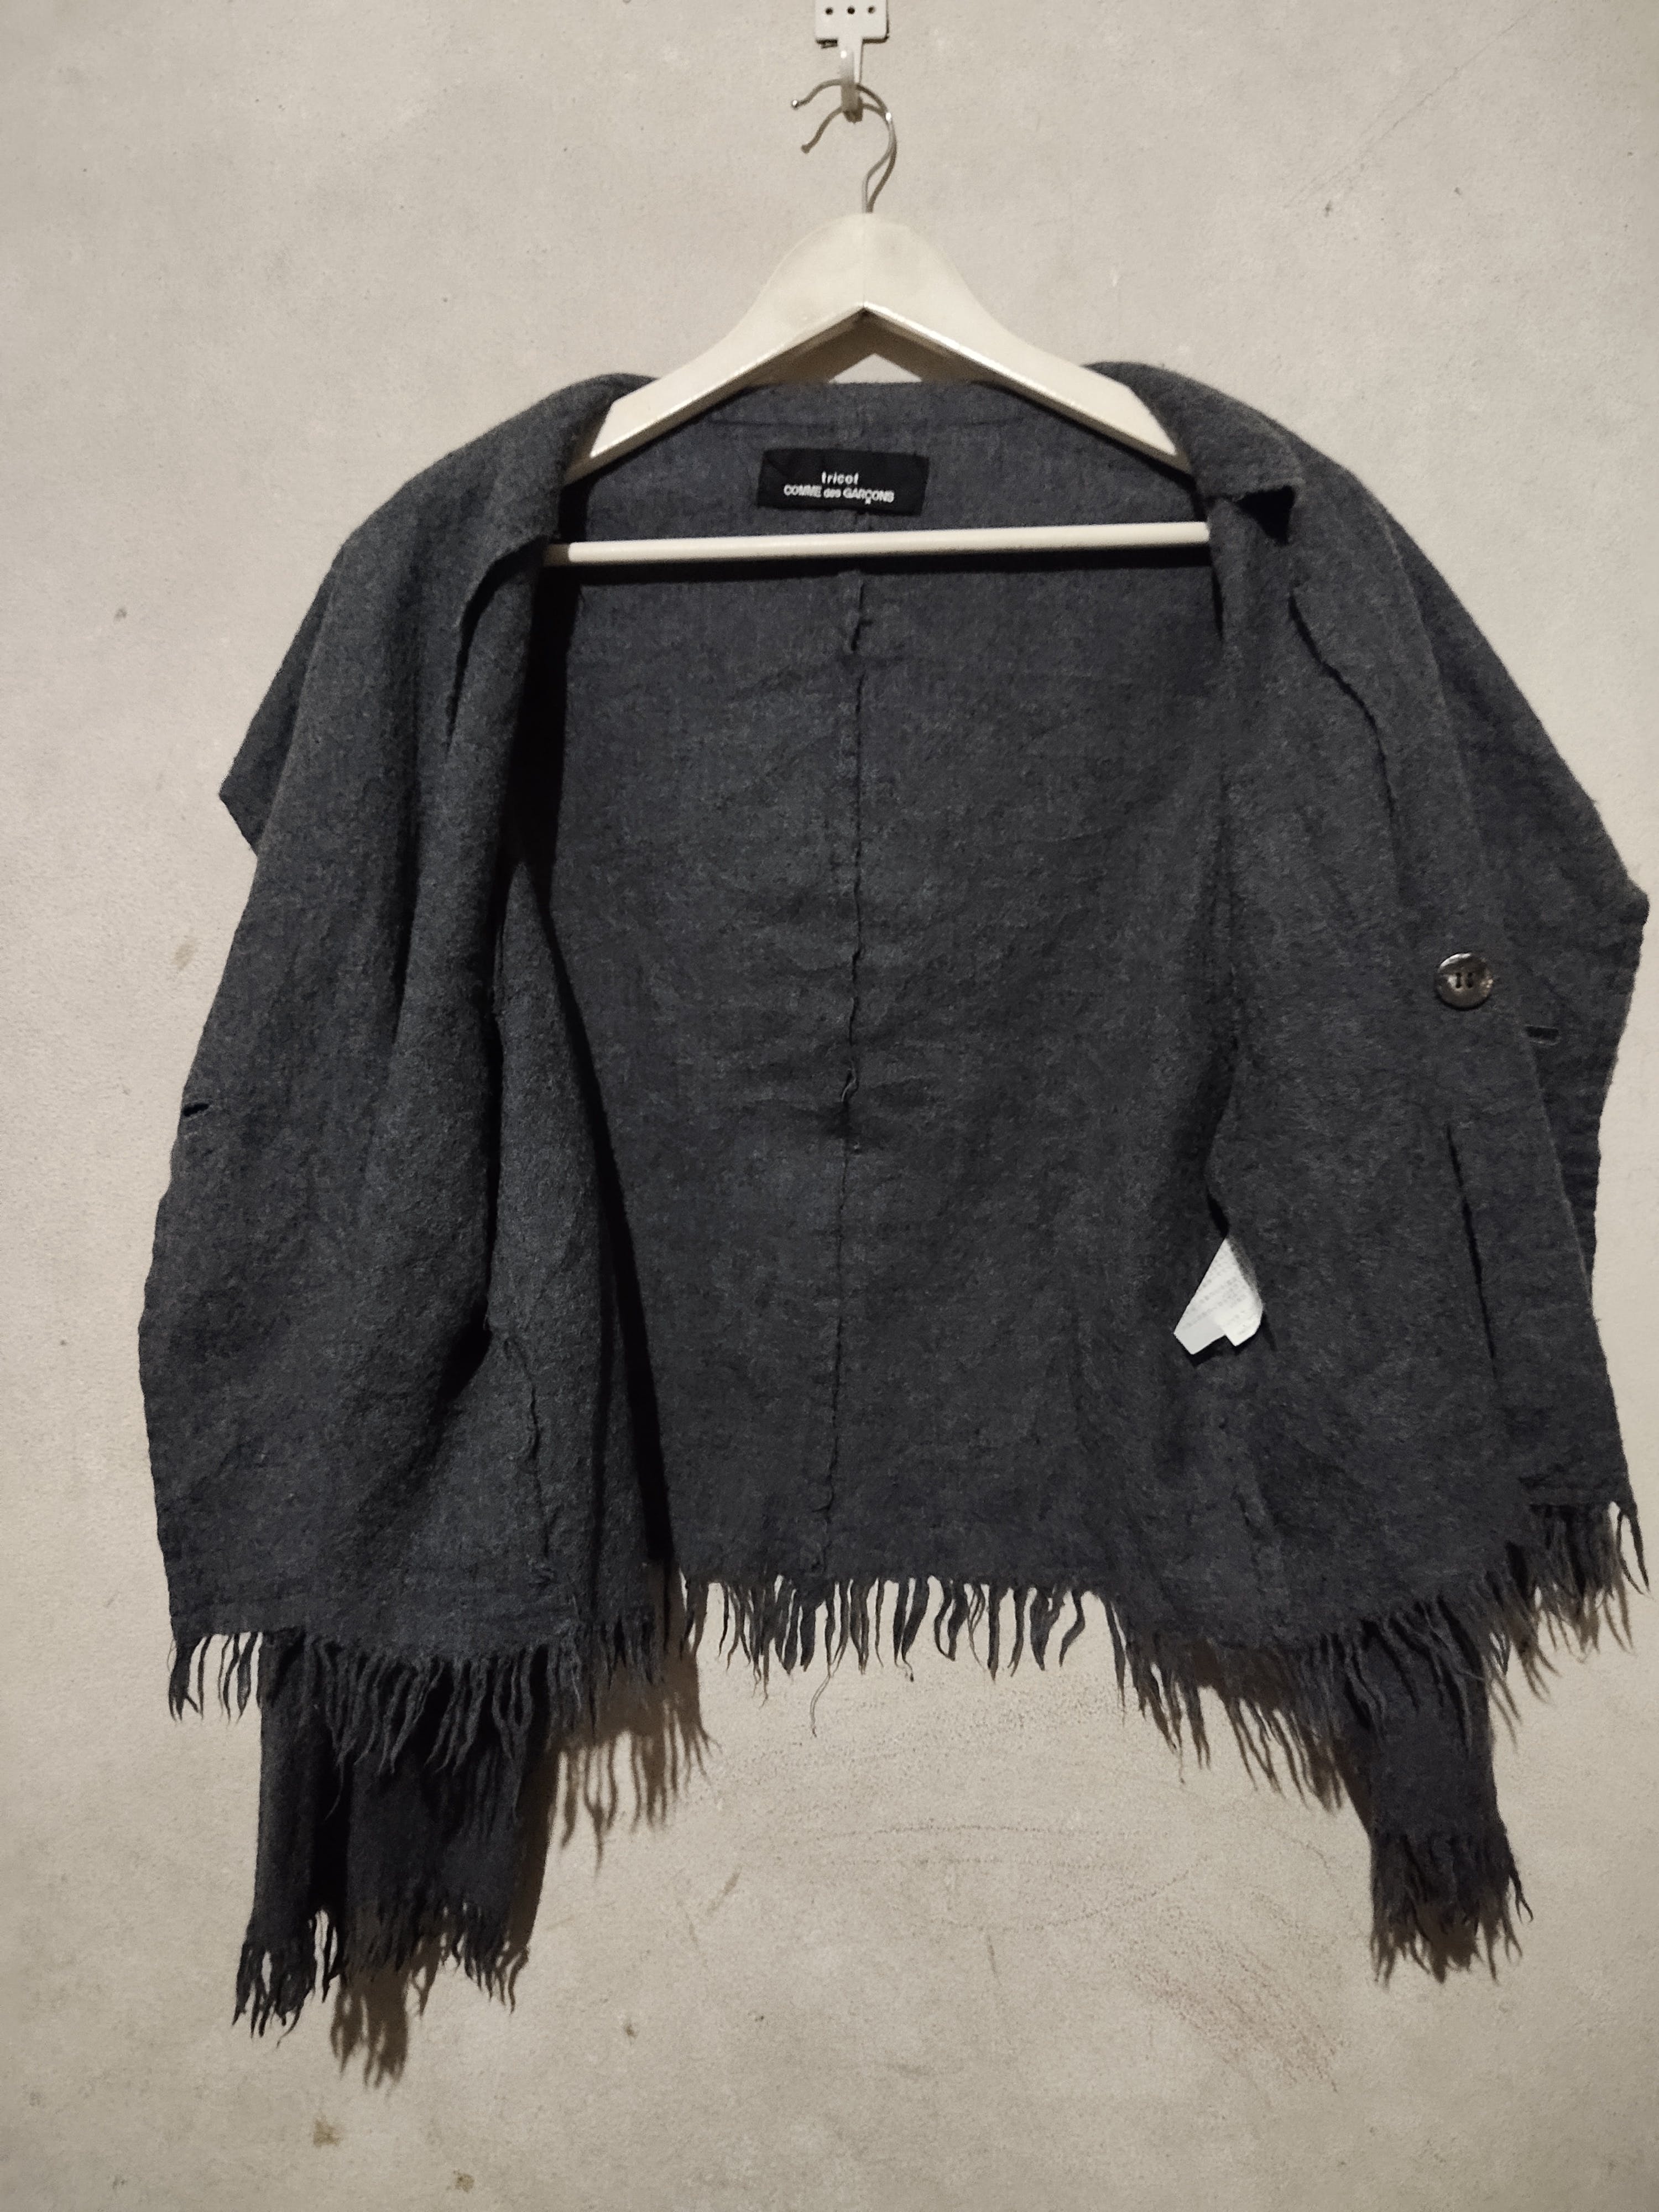 Vintage AD1992 tricot comme des gargons wool crop top jacket - 3